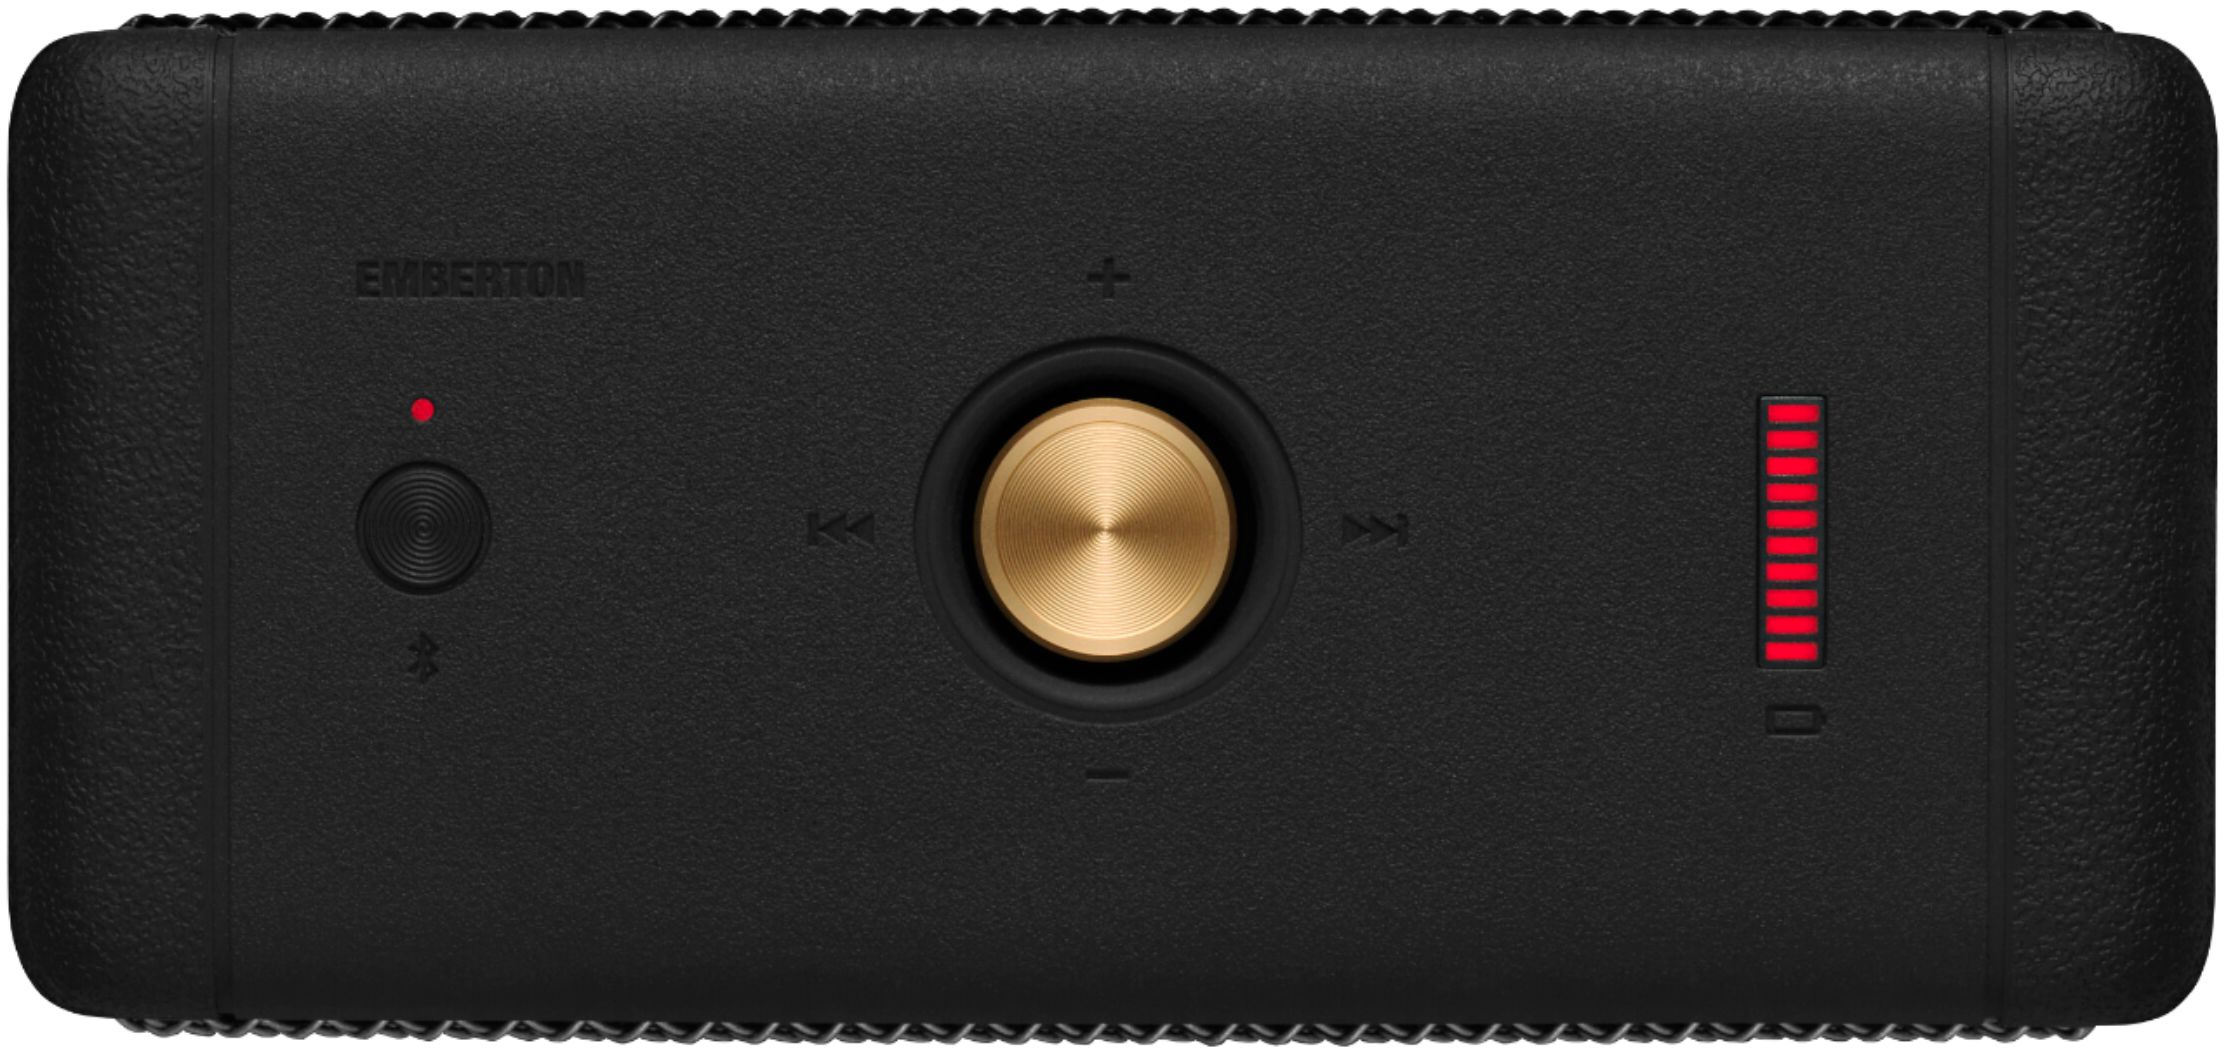 Marshall Emberton Portable Bluetooth Speaker Black - Best Buy 1001908